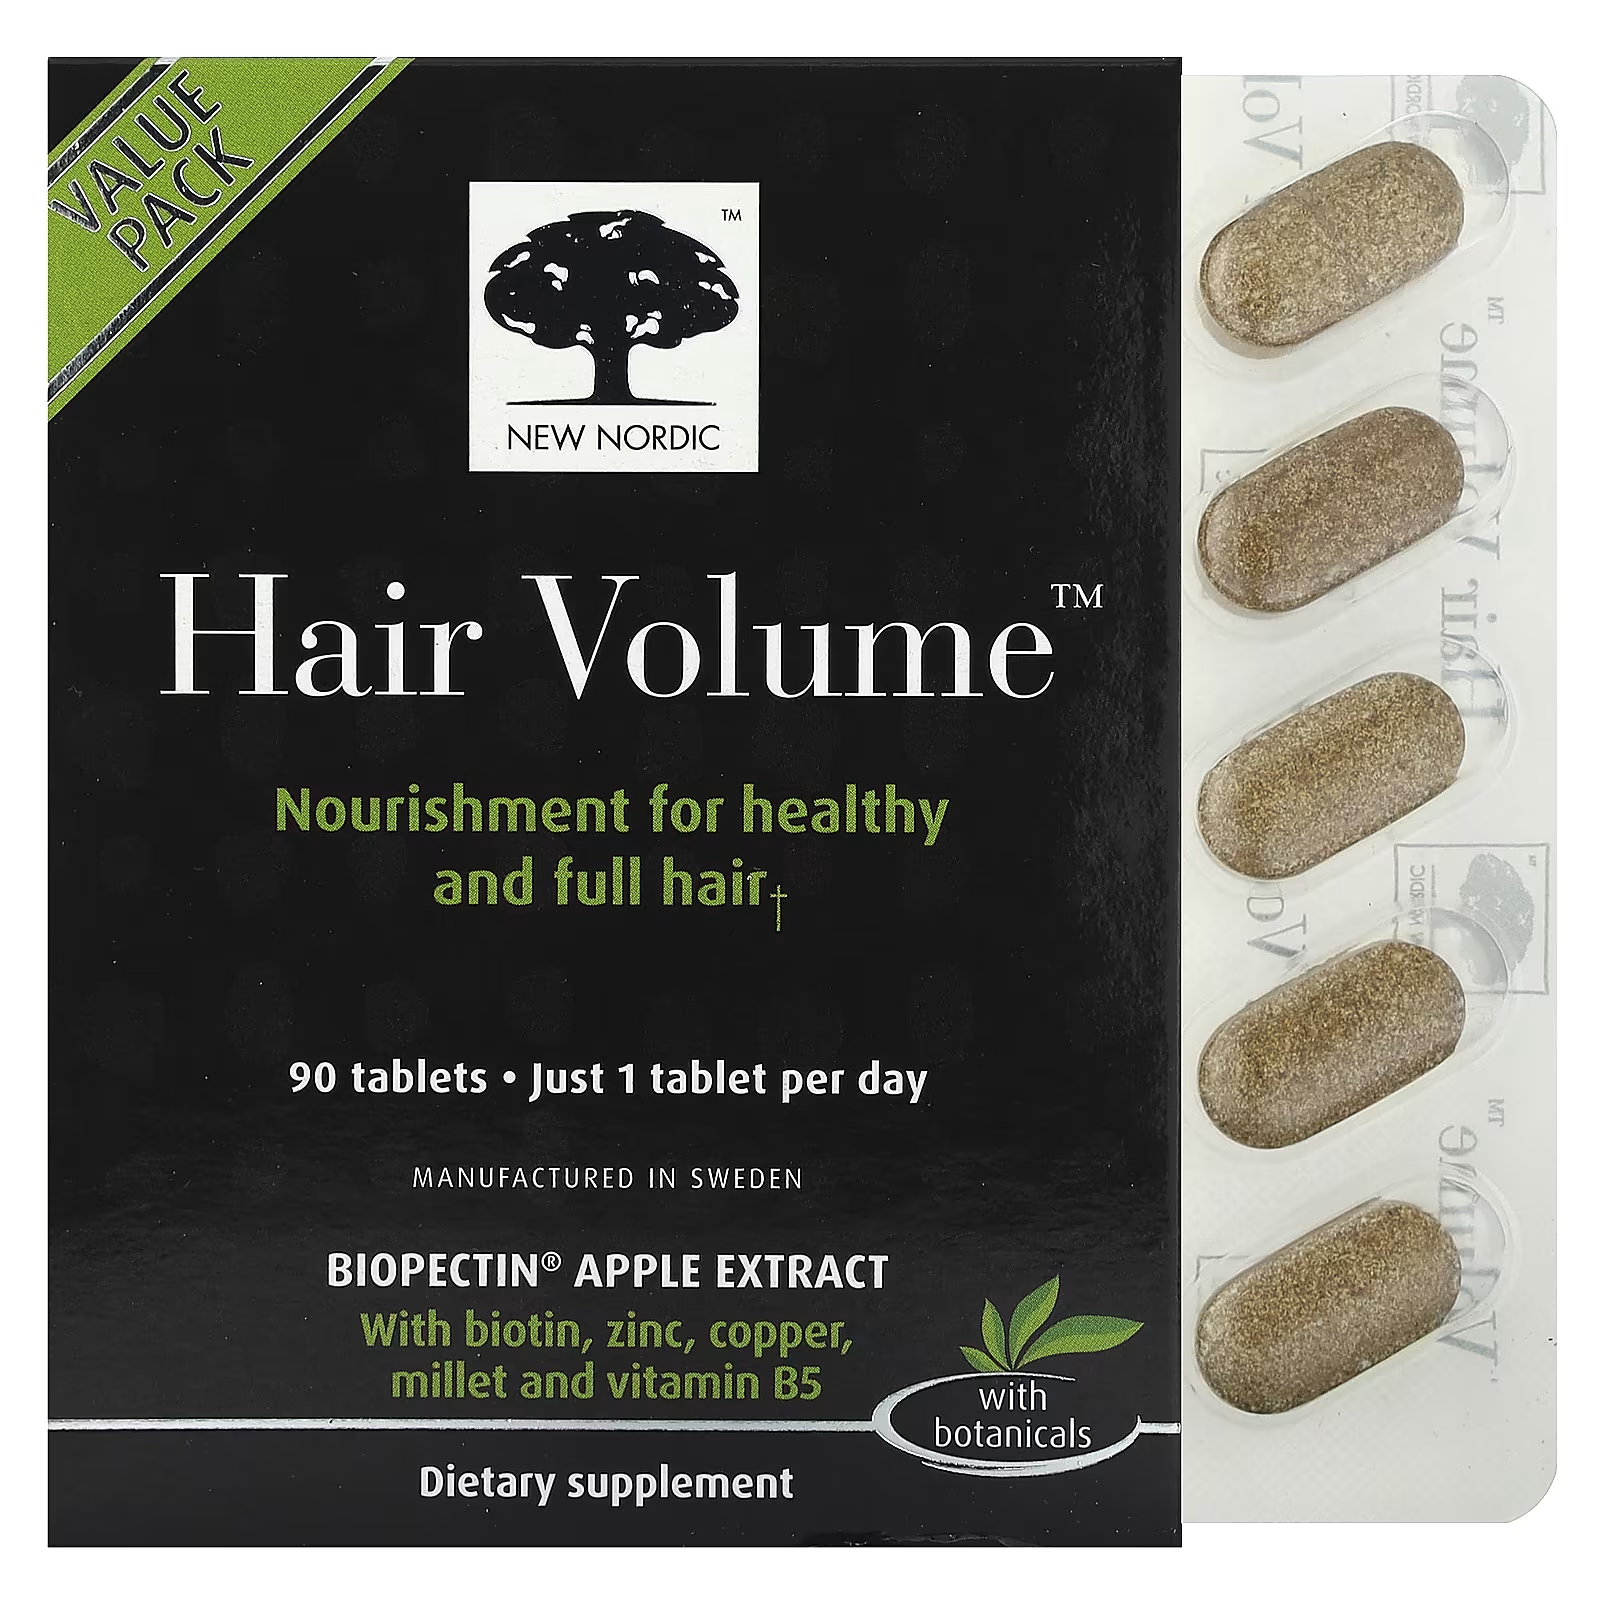 Пищевая добавка New Nordic US Inc для объема волос, 90 таблеток new nordic hair volume средство для роста и объема волос с растительными ингредиентами 30 таблеток